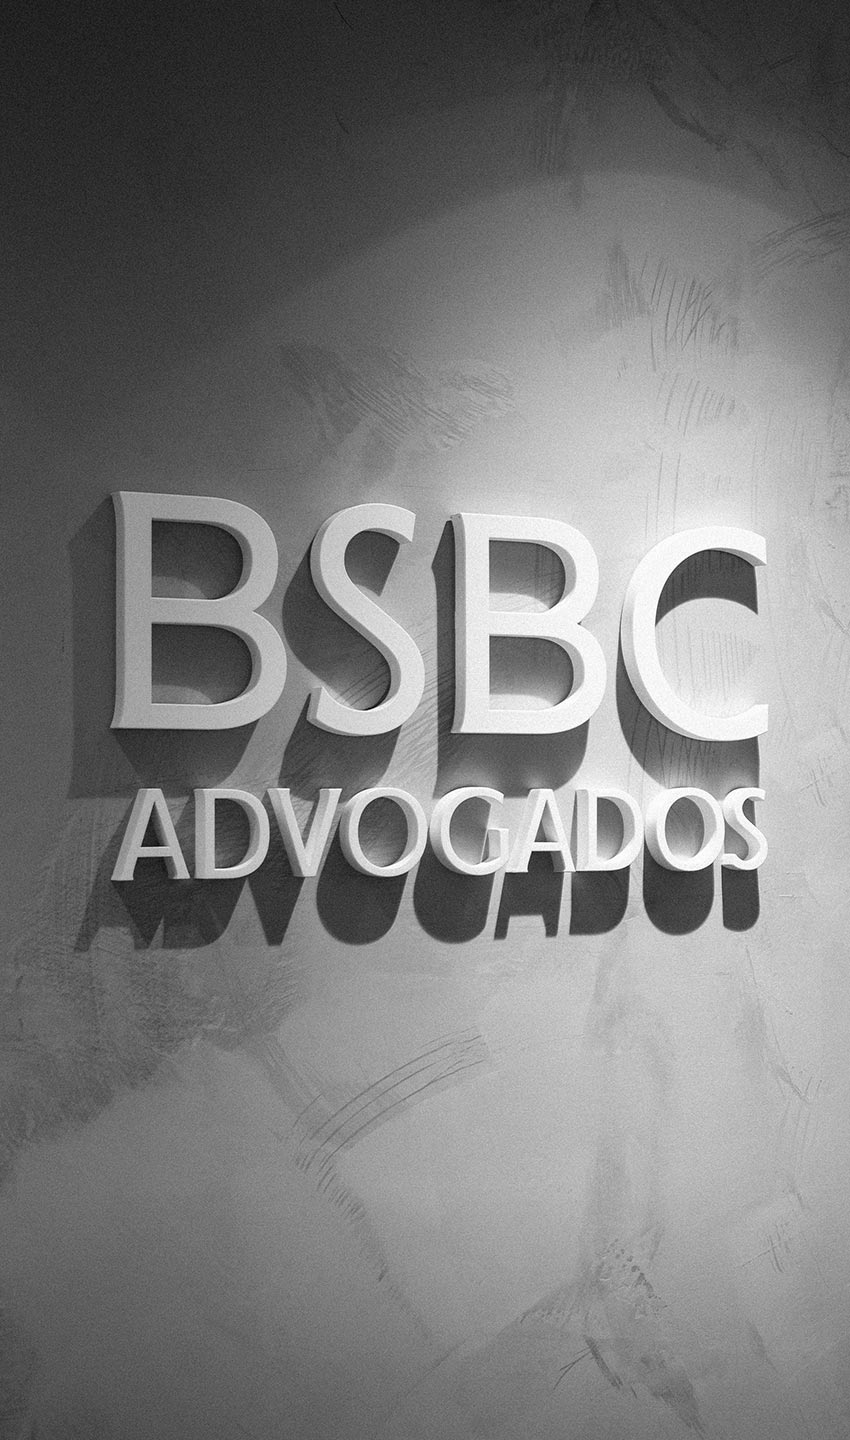 BSBC - Advogados